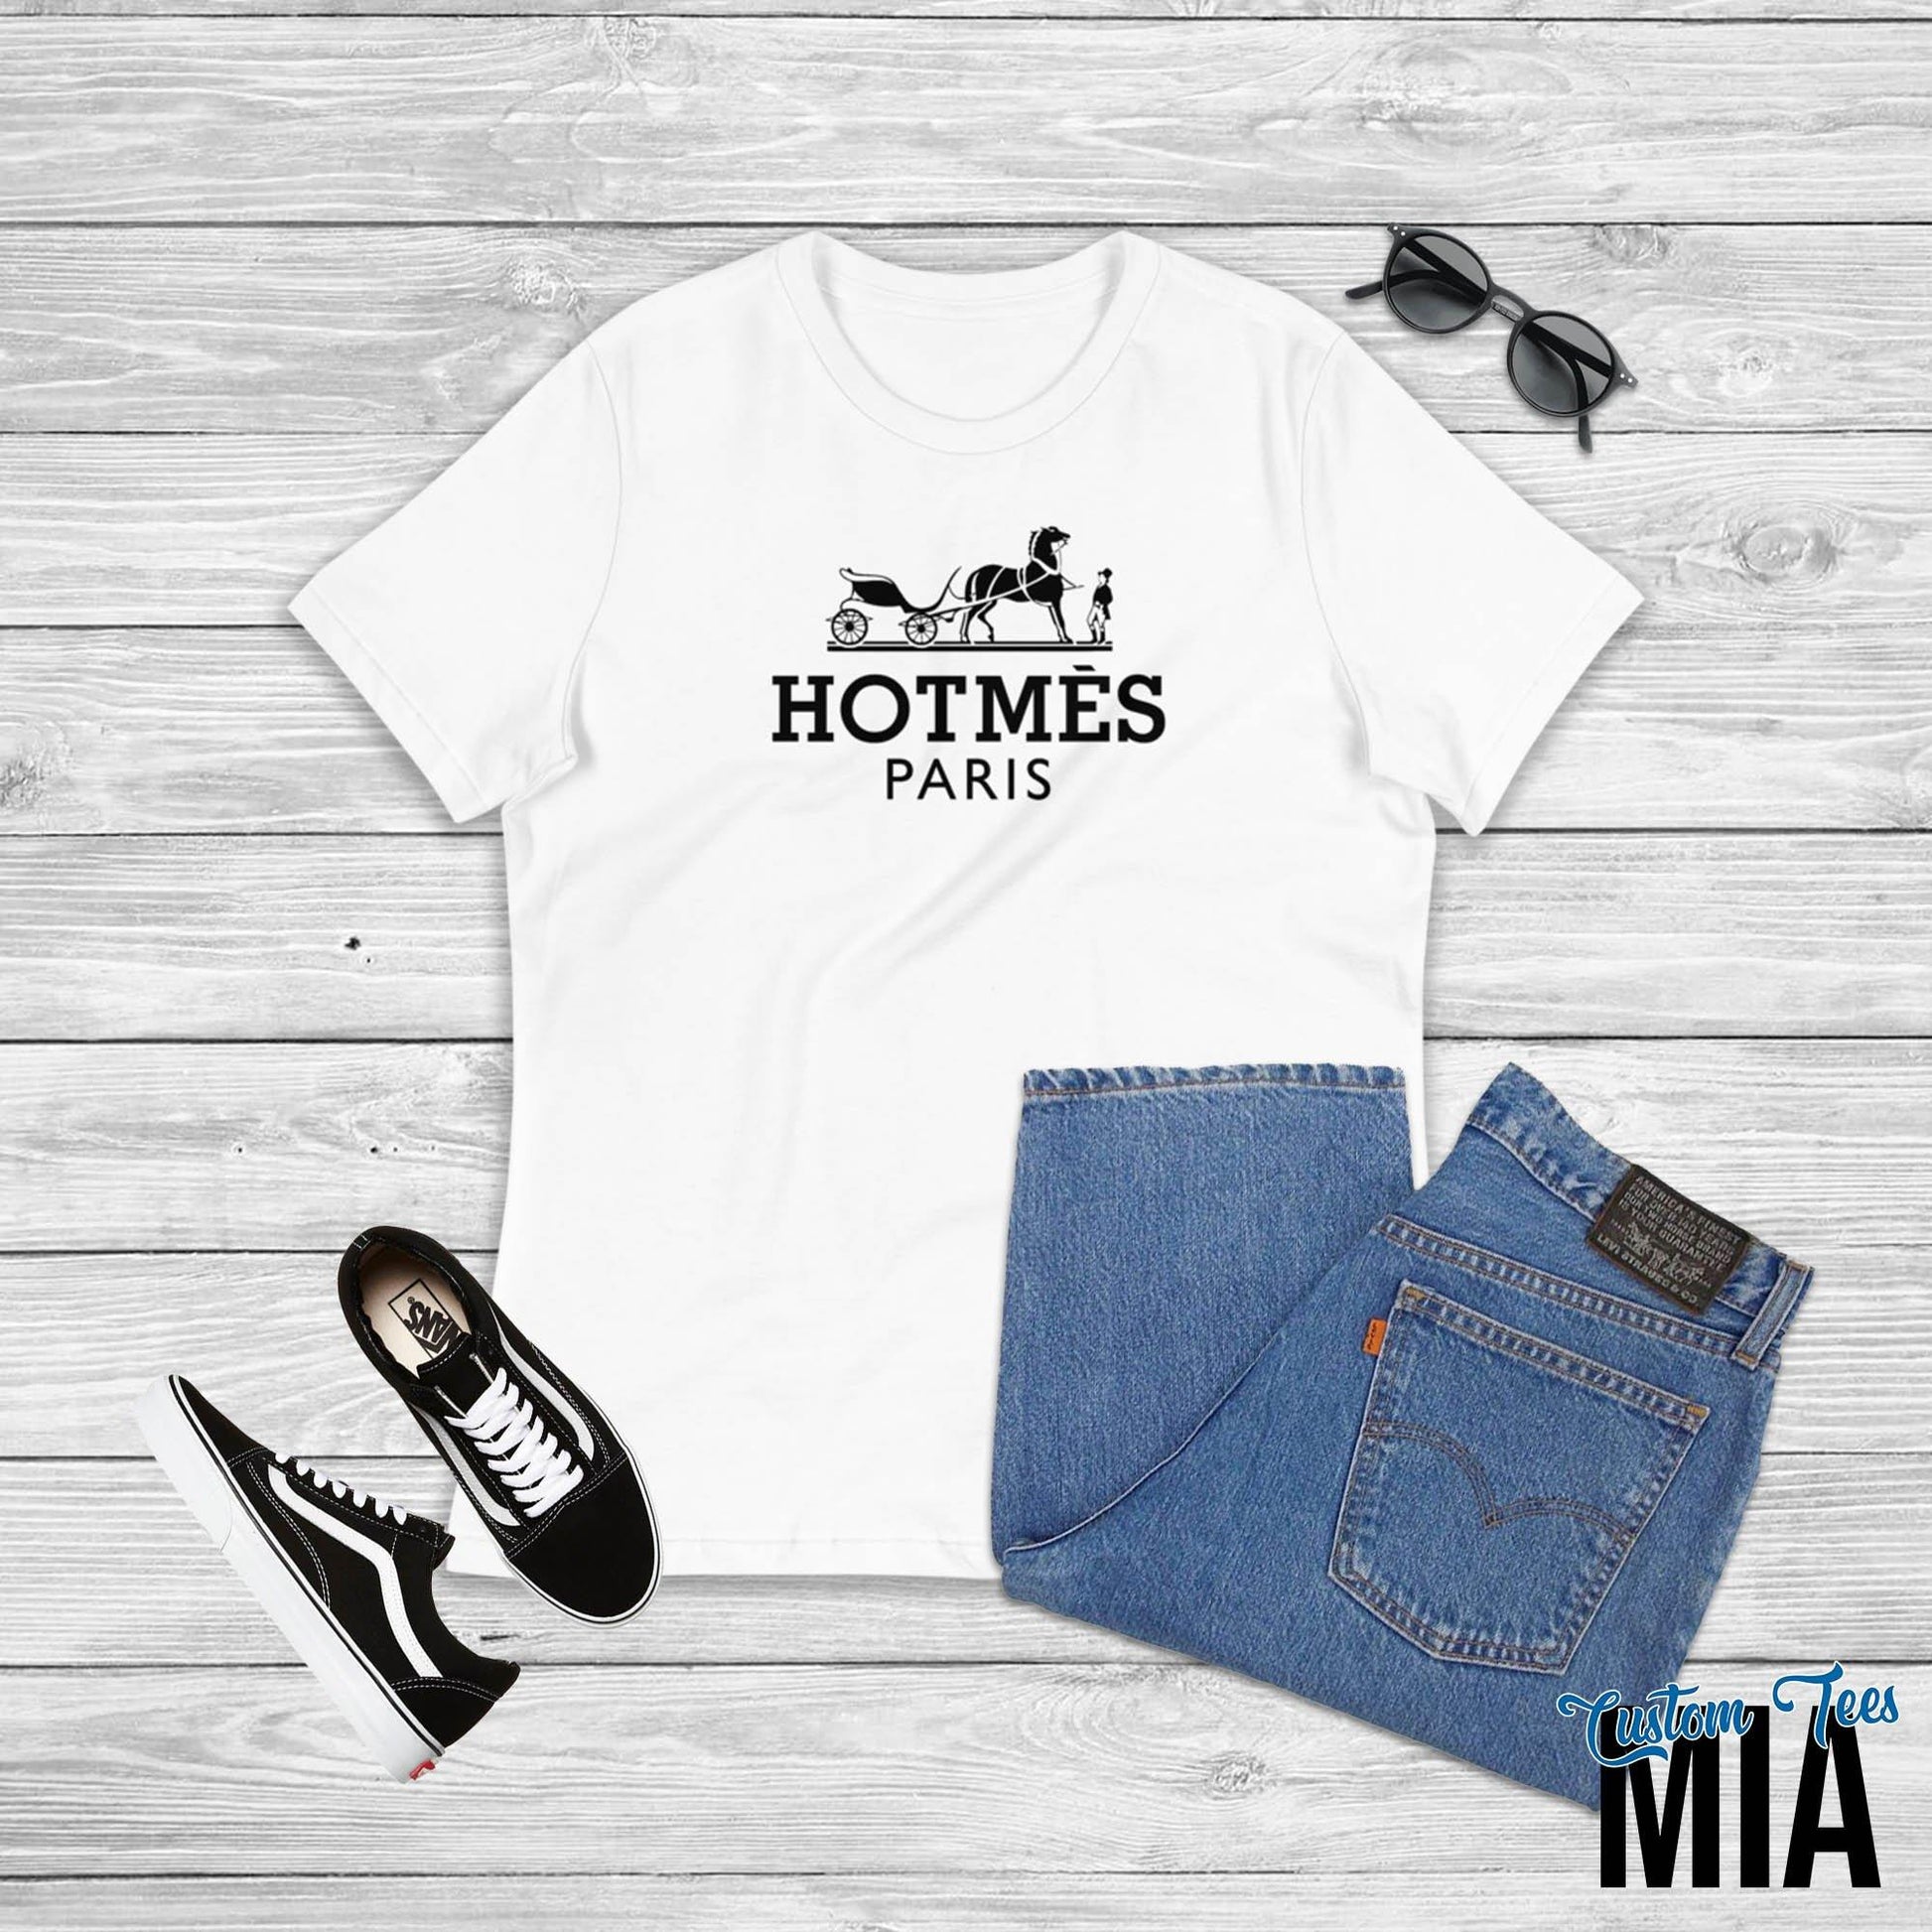 Hot Mess Shirt - Custom Tees MIA